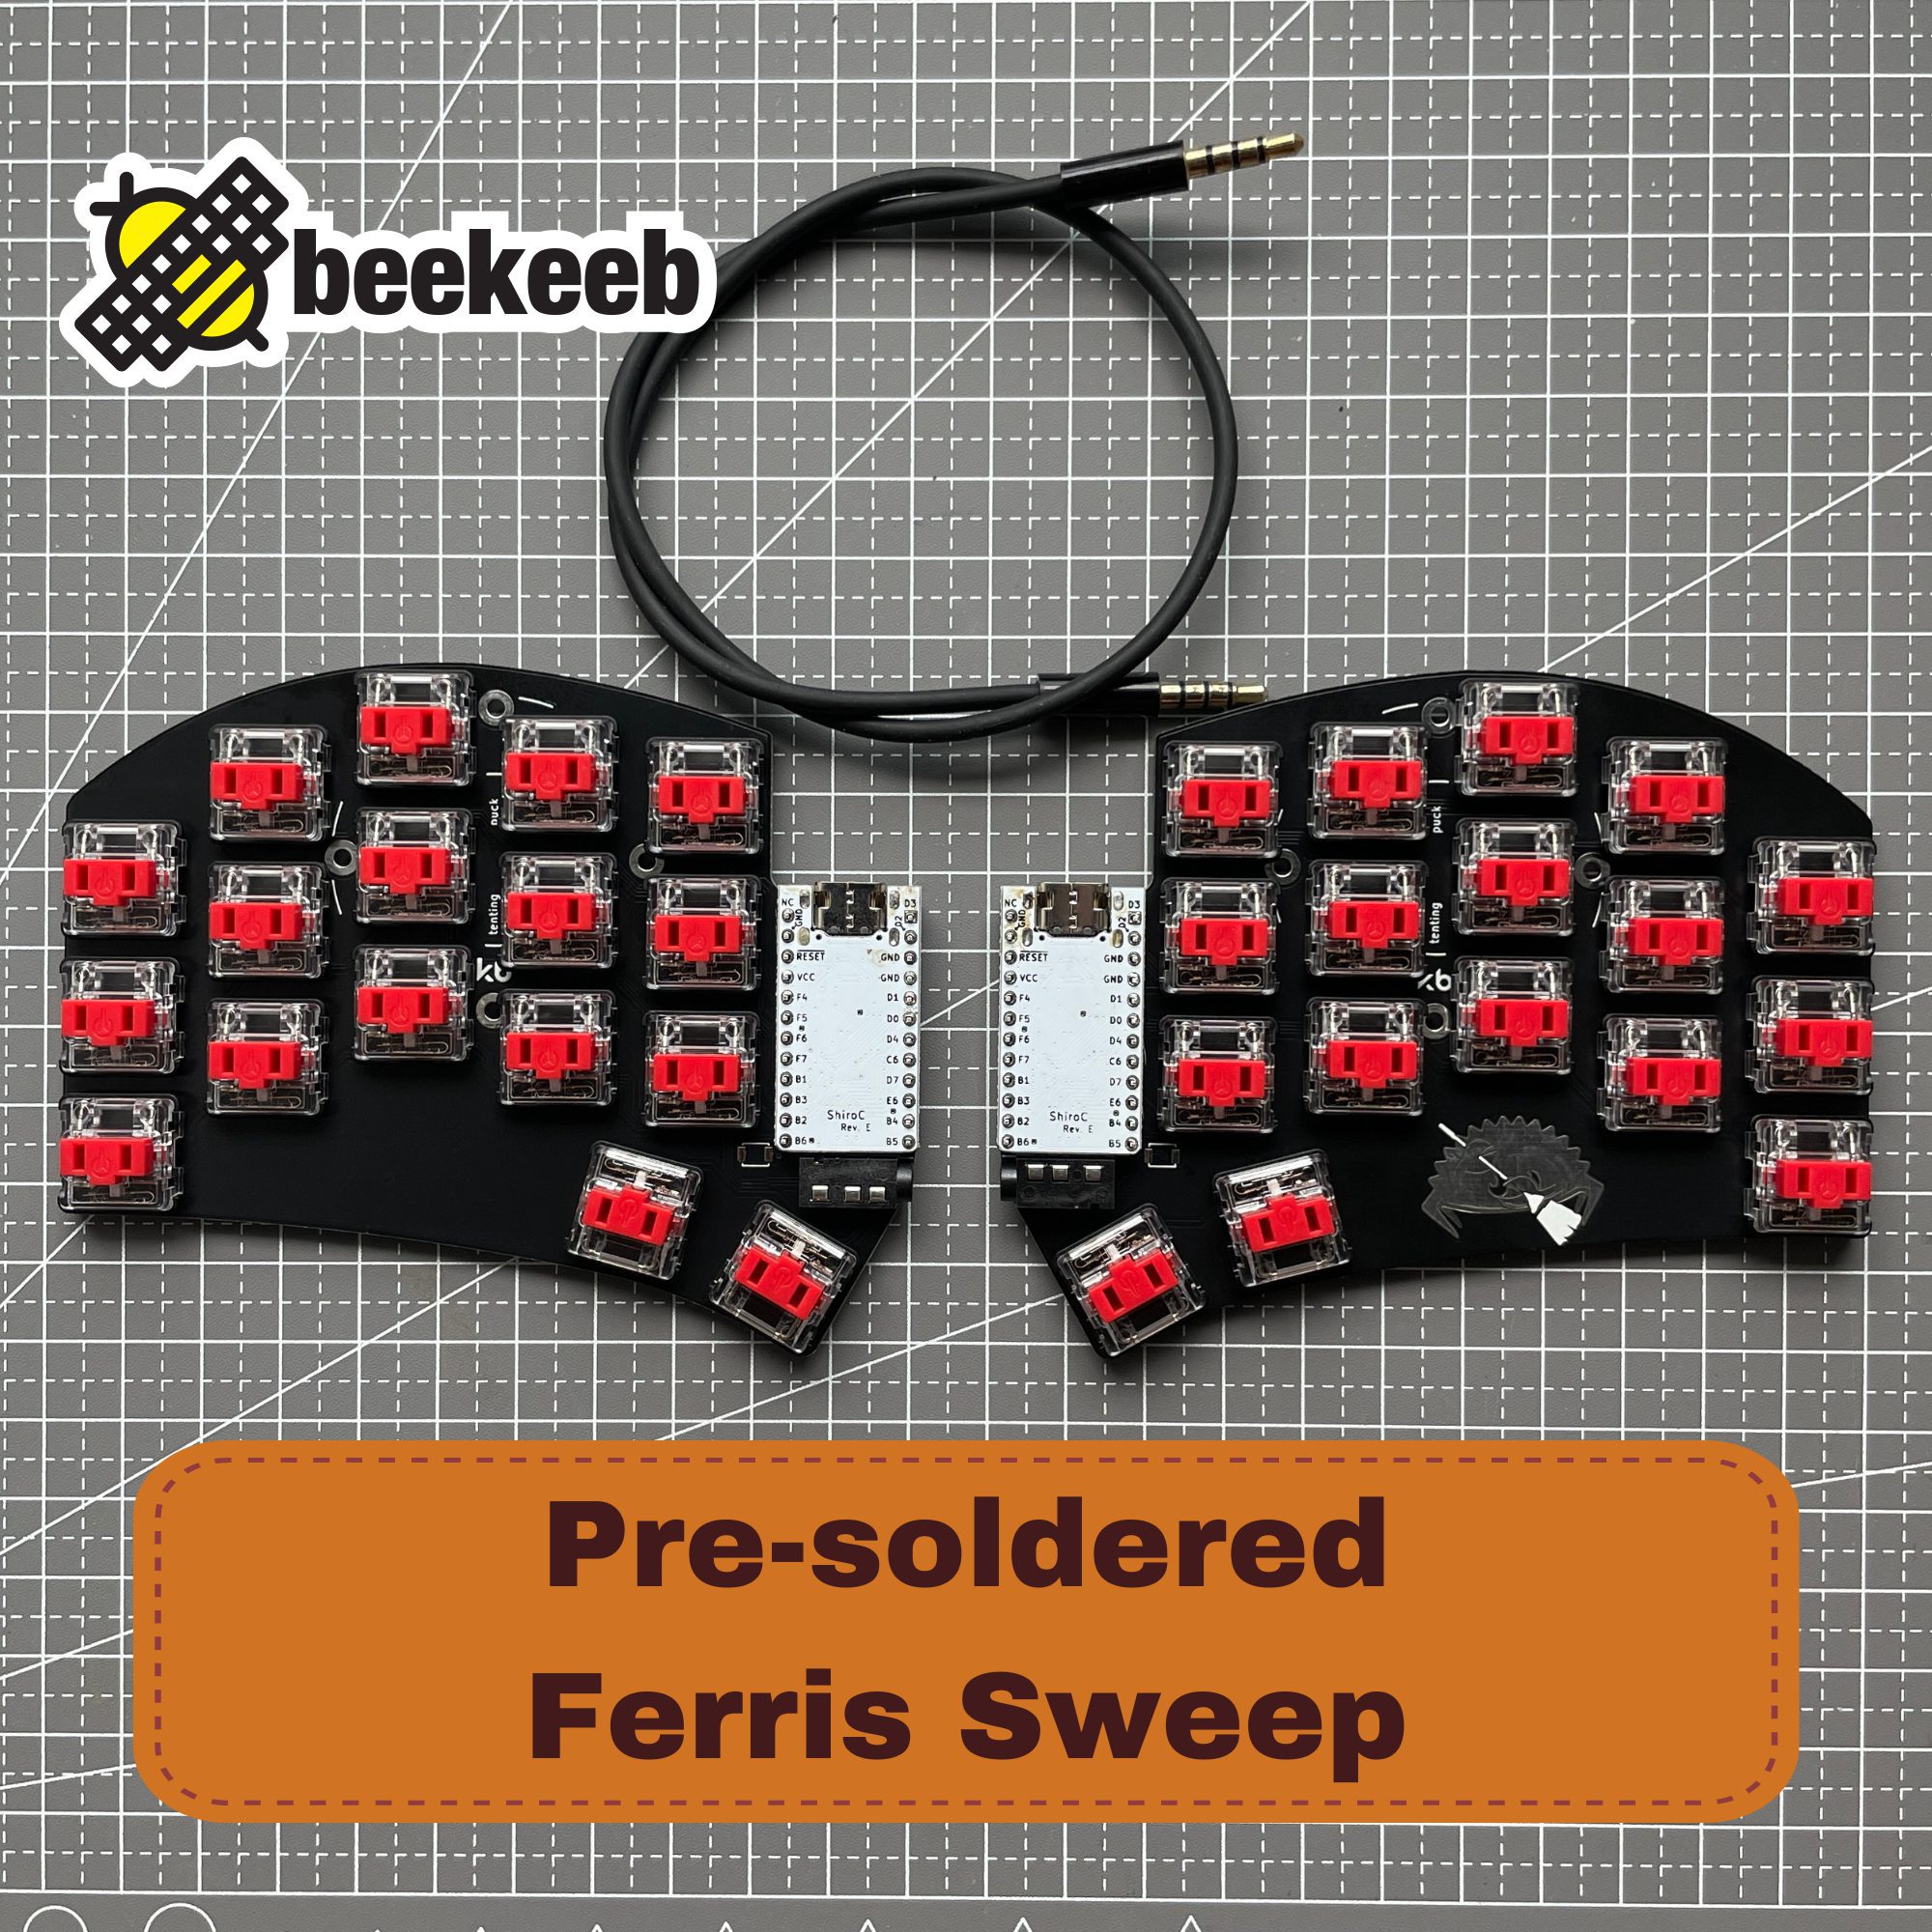 Ferris Sweep v2.2 Low Profile Split Keyboard DIY kit